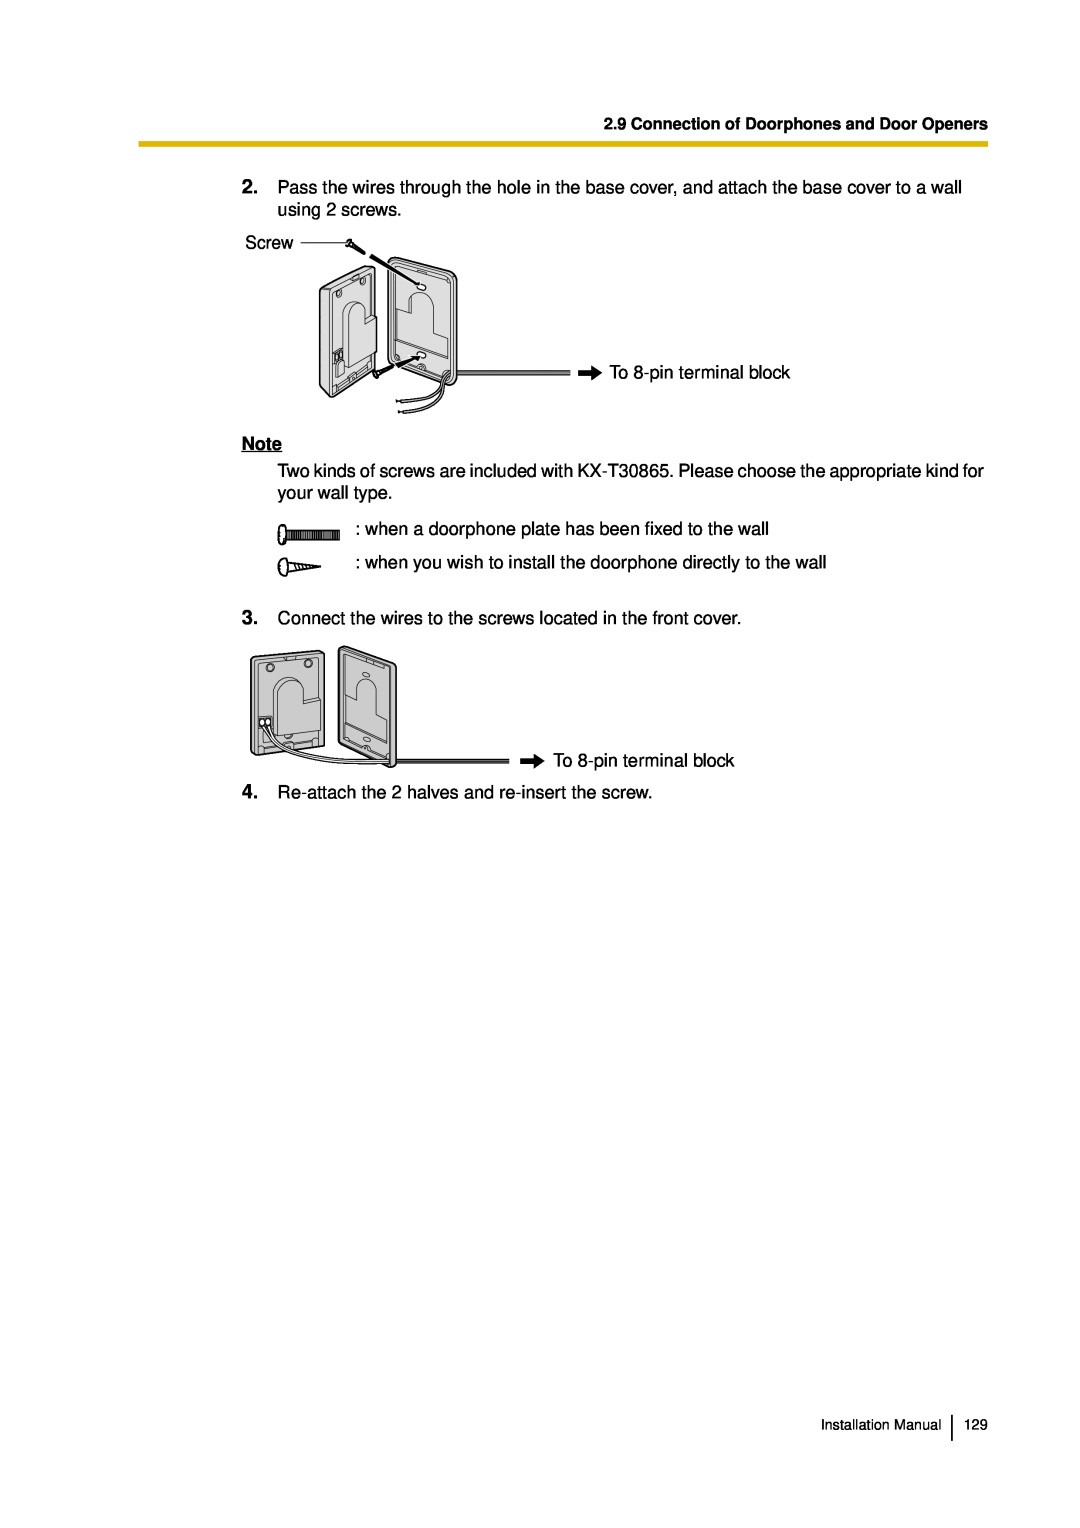 Panasonic KX-TDA30 installation manual Screw To 8-pinterminal block 